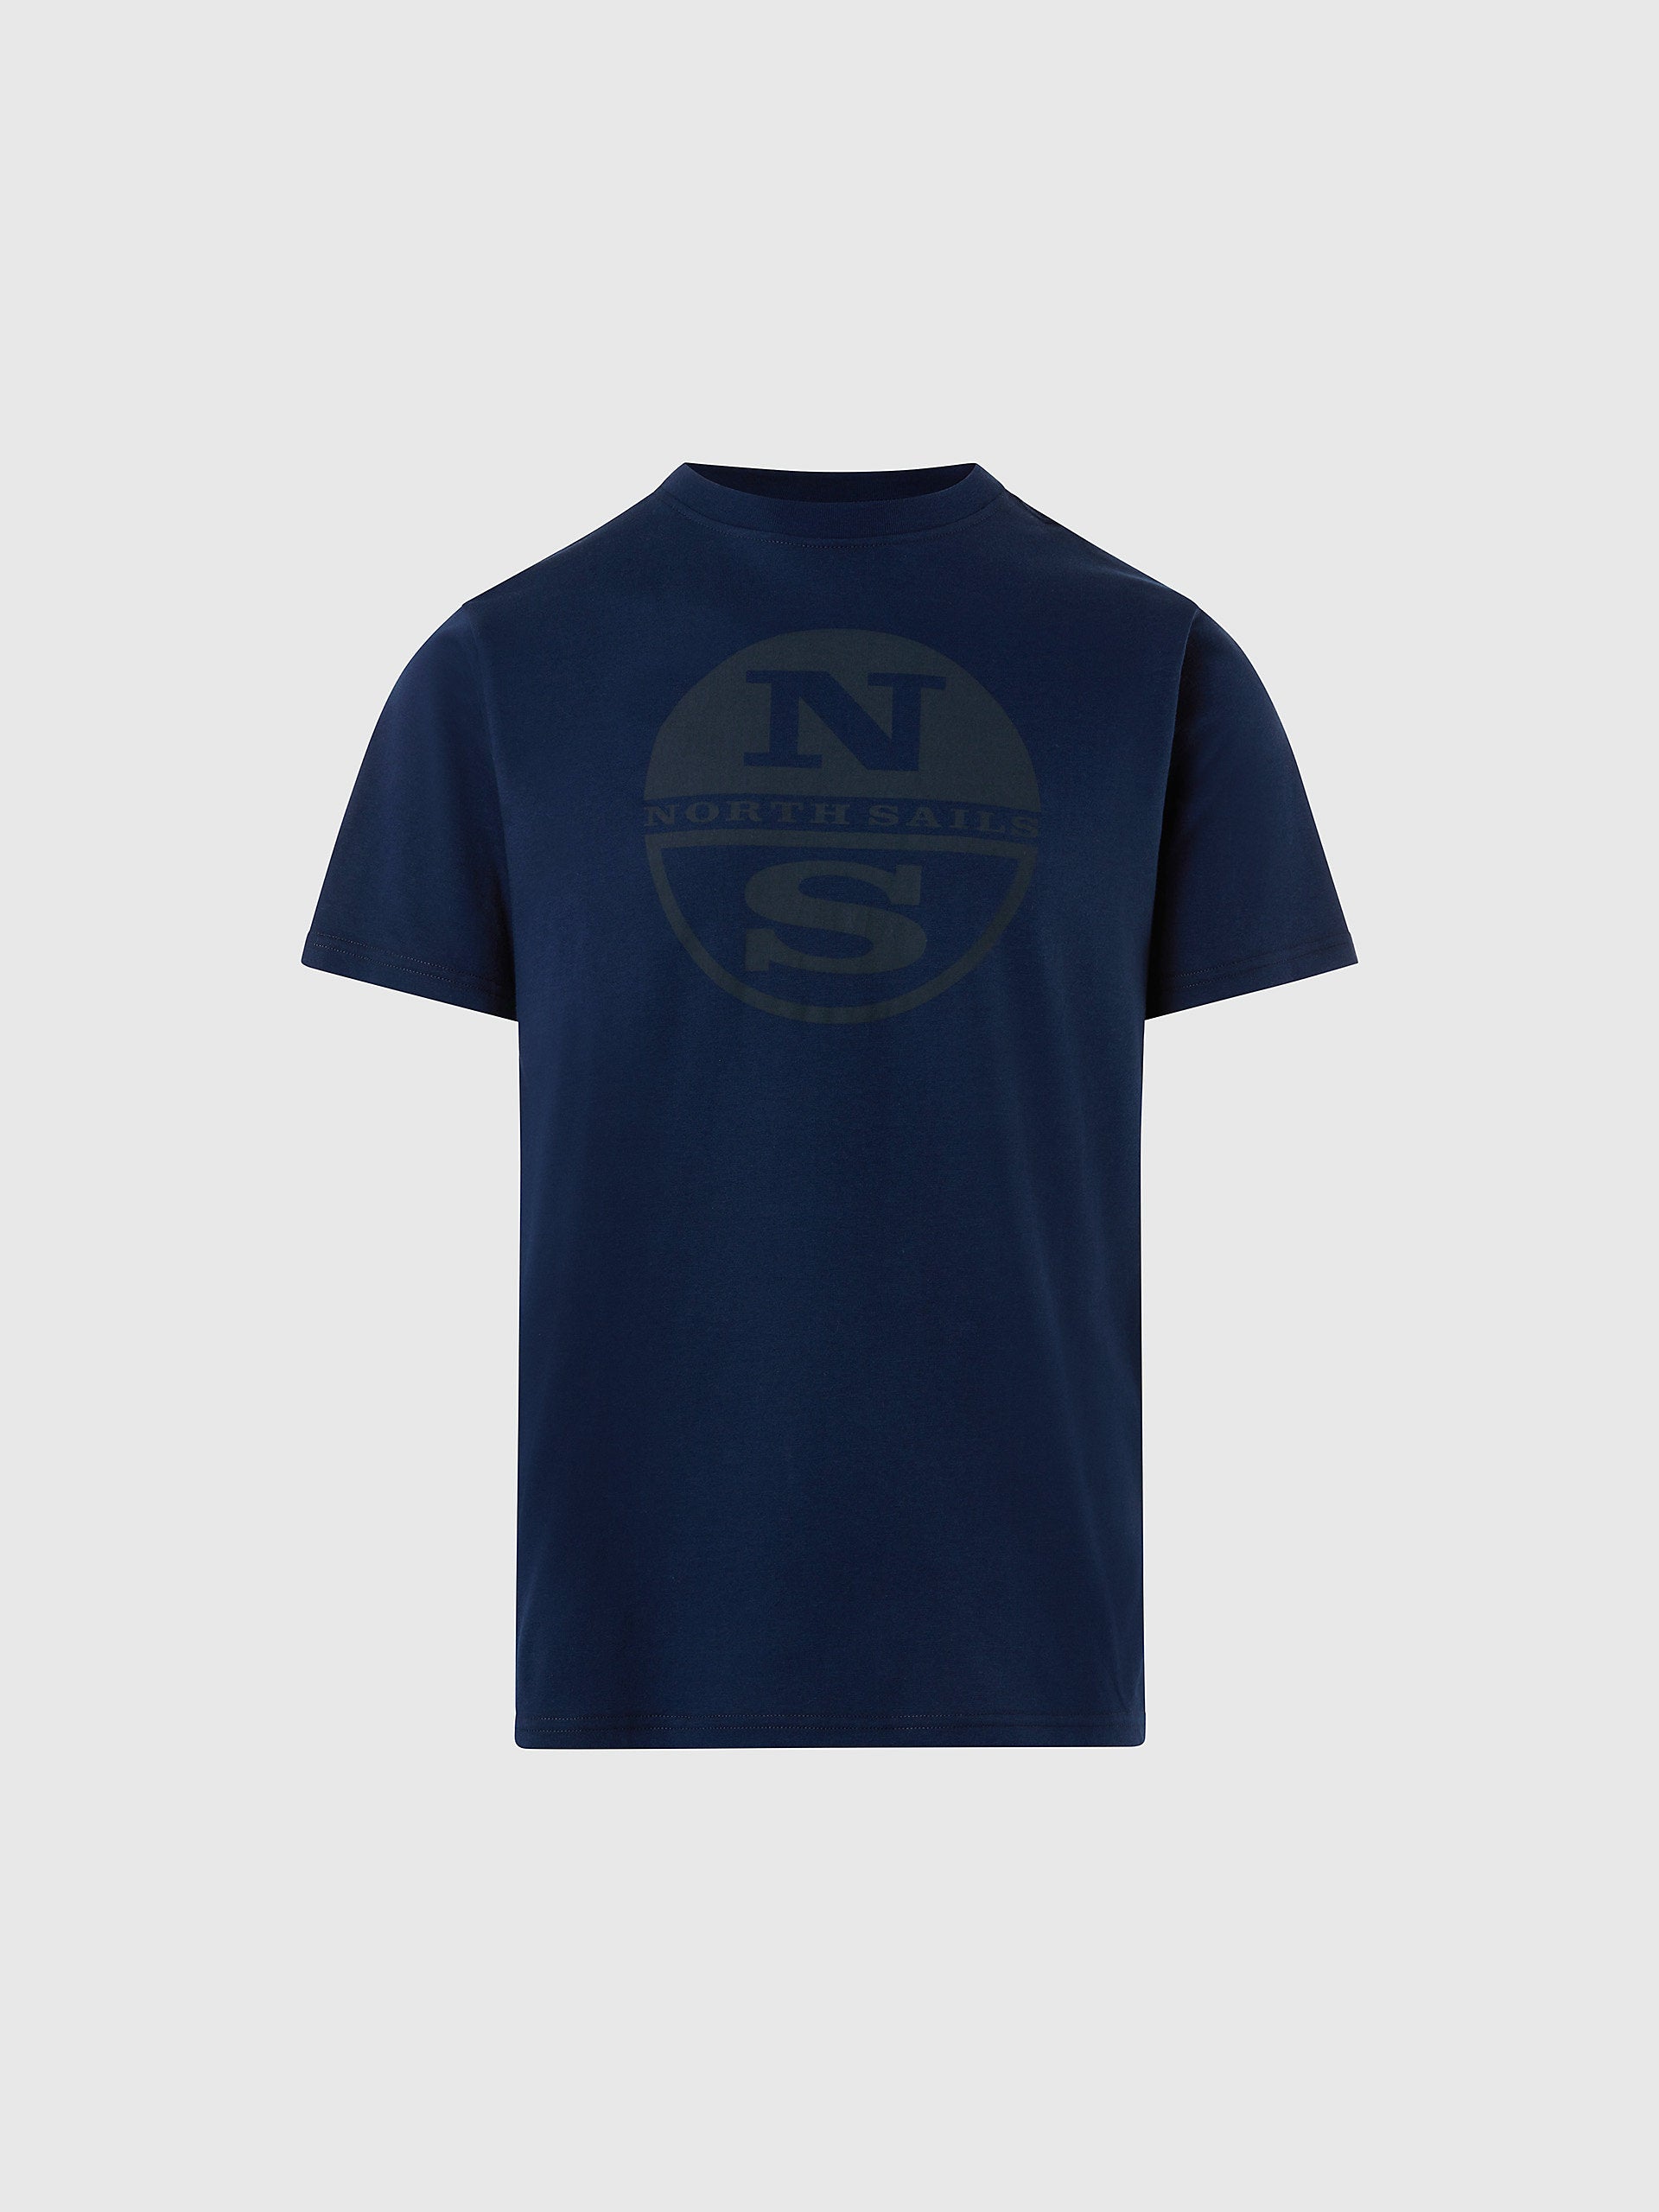 North Sails - T-shirt with logo printNorth SailsNavy blueXXL